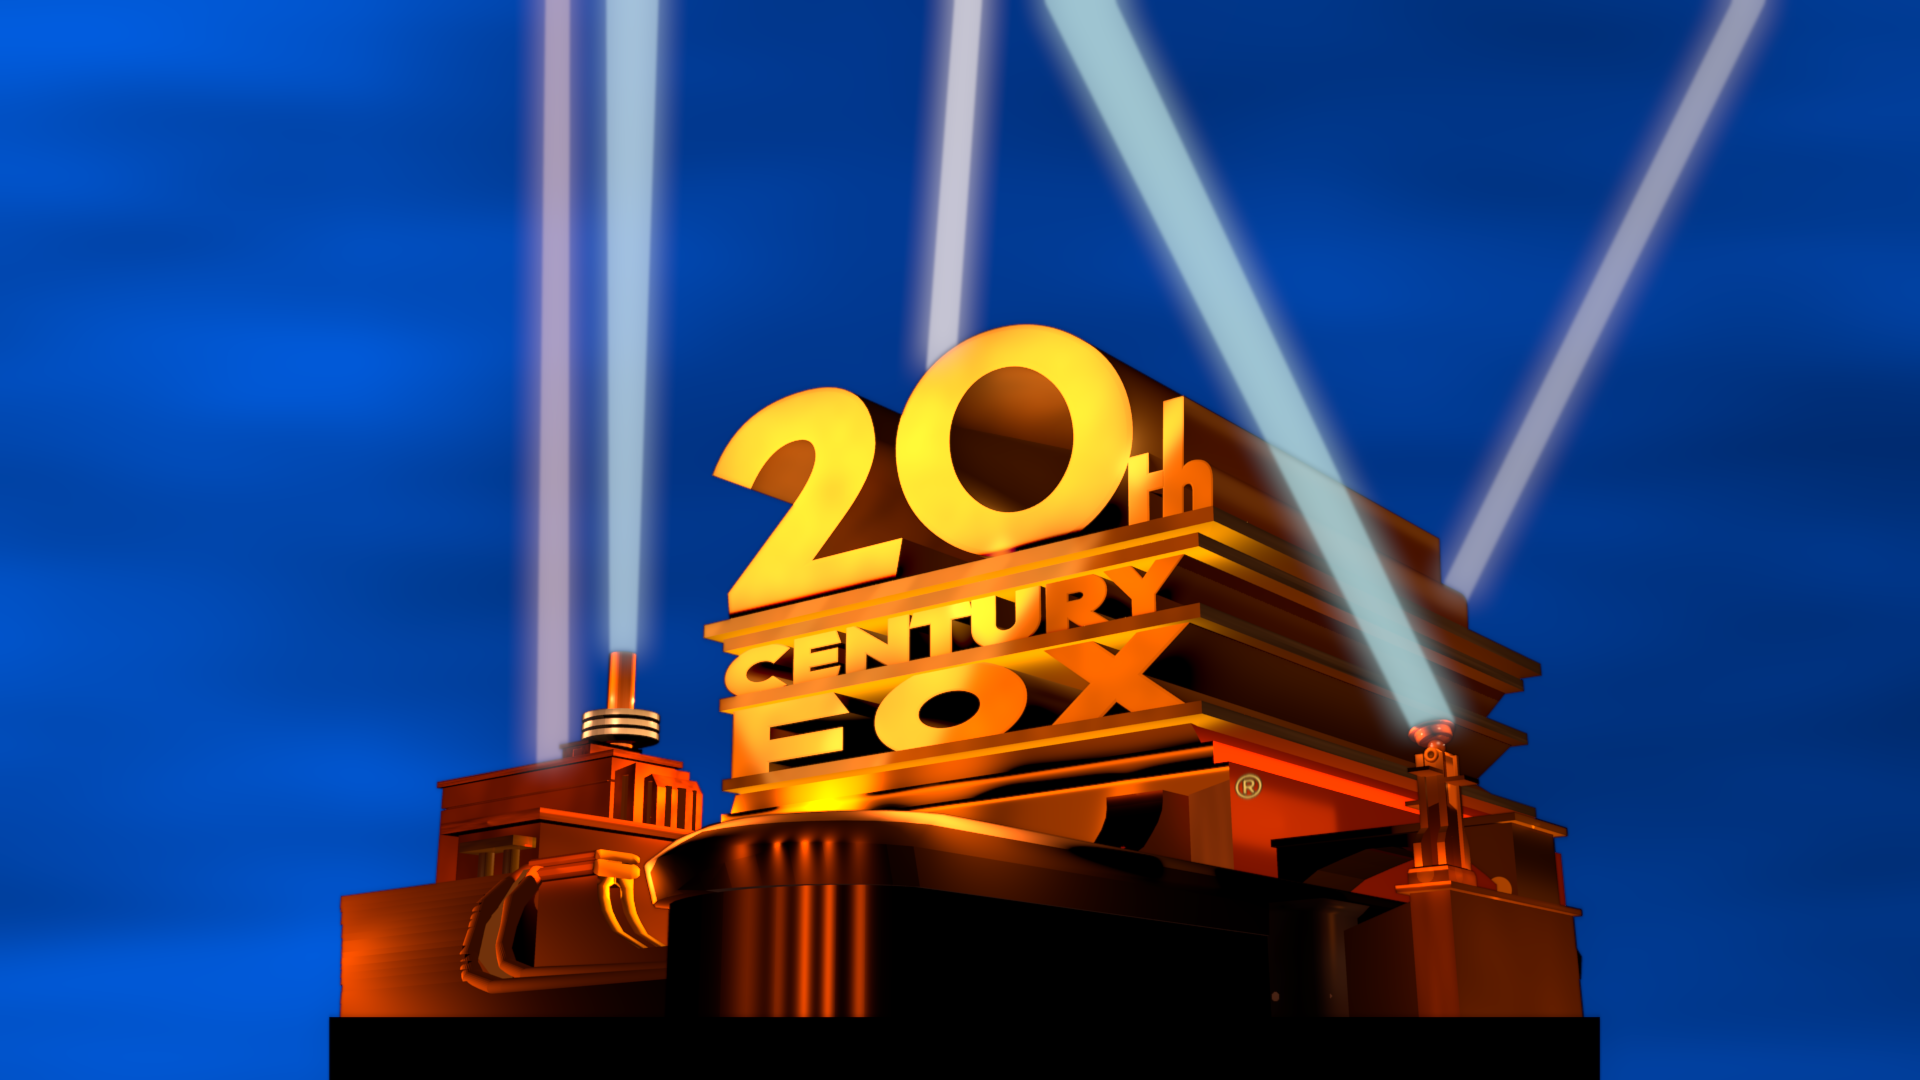 20th Century Fox 1935 logo 3.0 by ethan1986media on DeviantArt